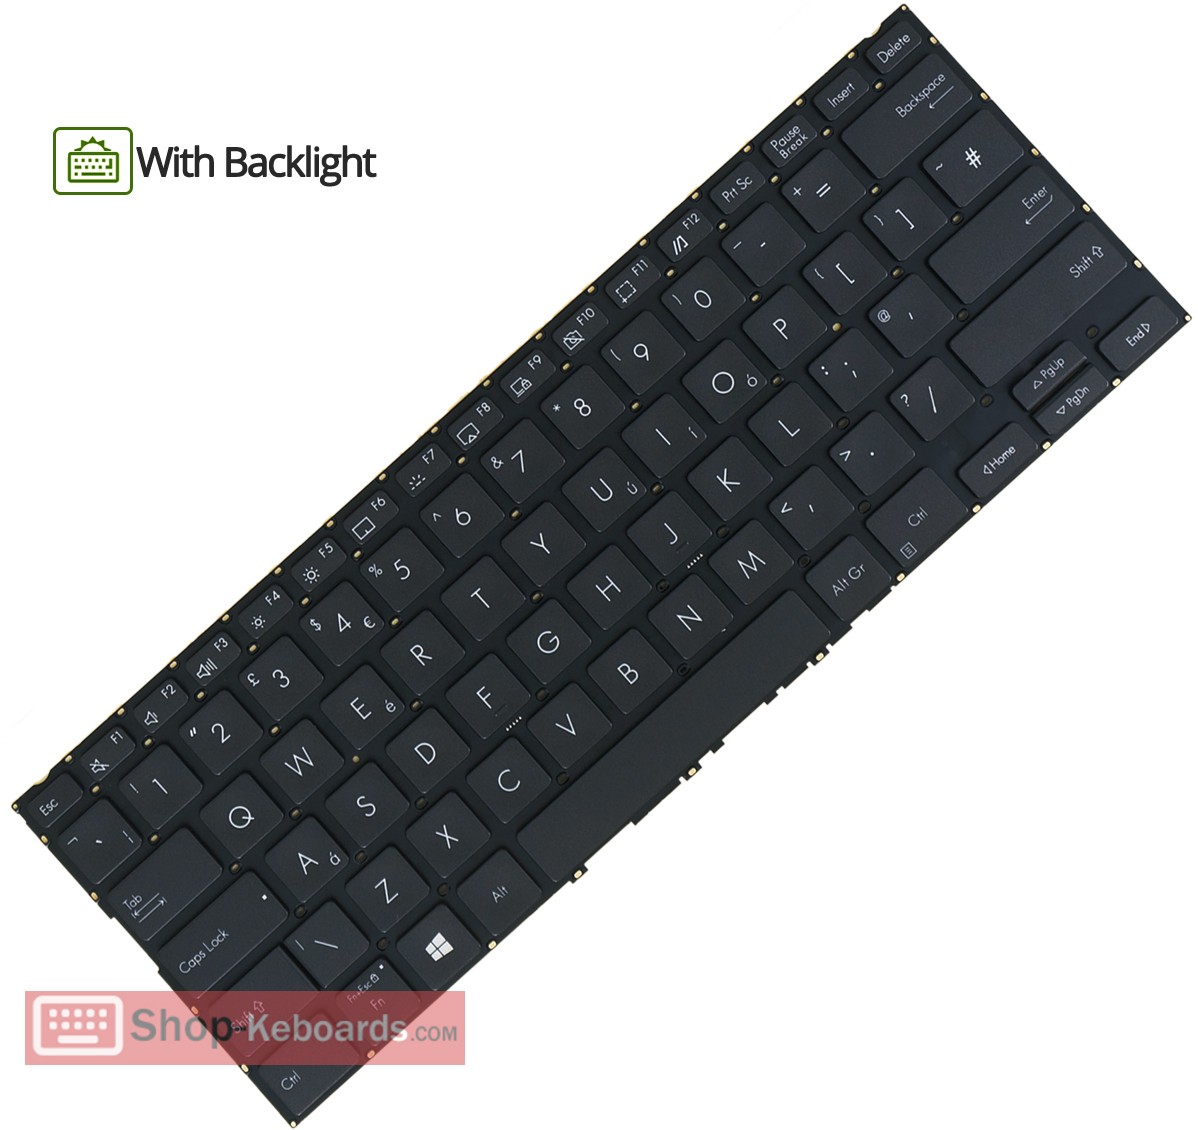 Asus 0KNB0-262VRU00  Keyboard replacement